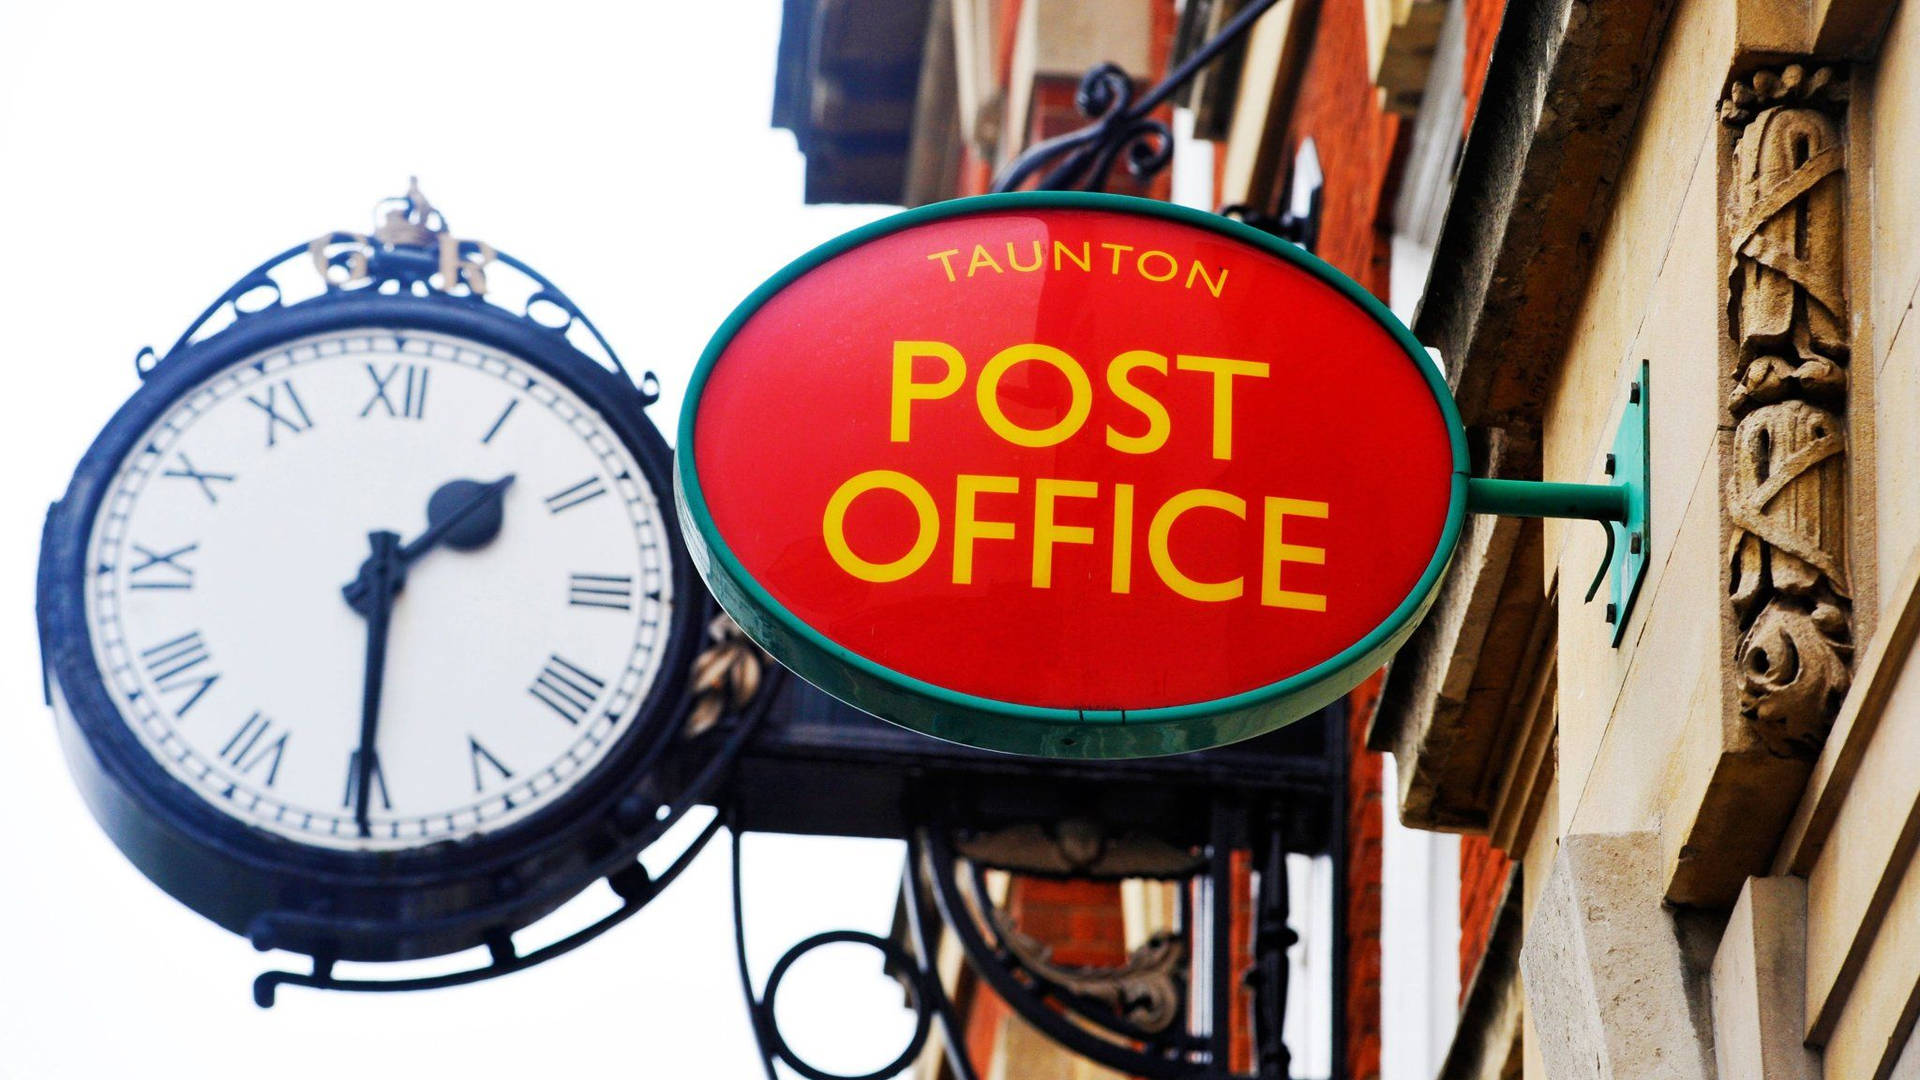 Taunton Uk Post Office Sign Wallpaper